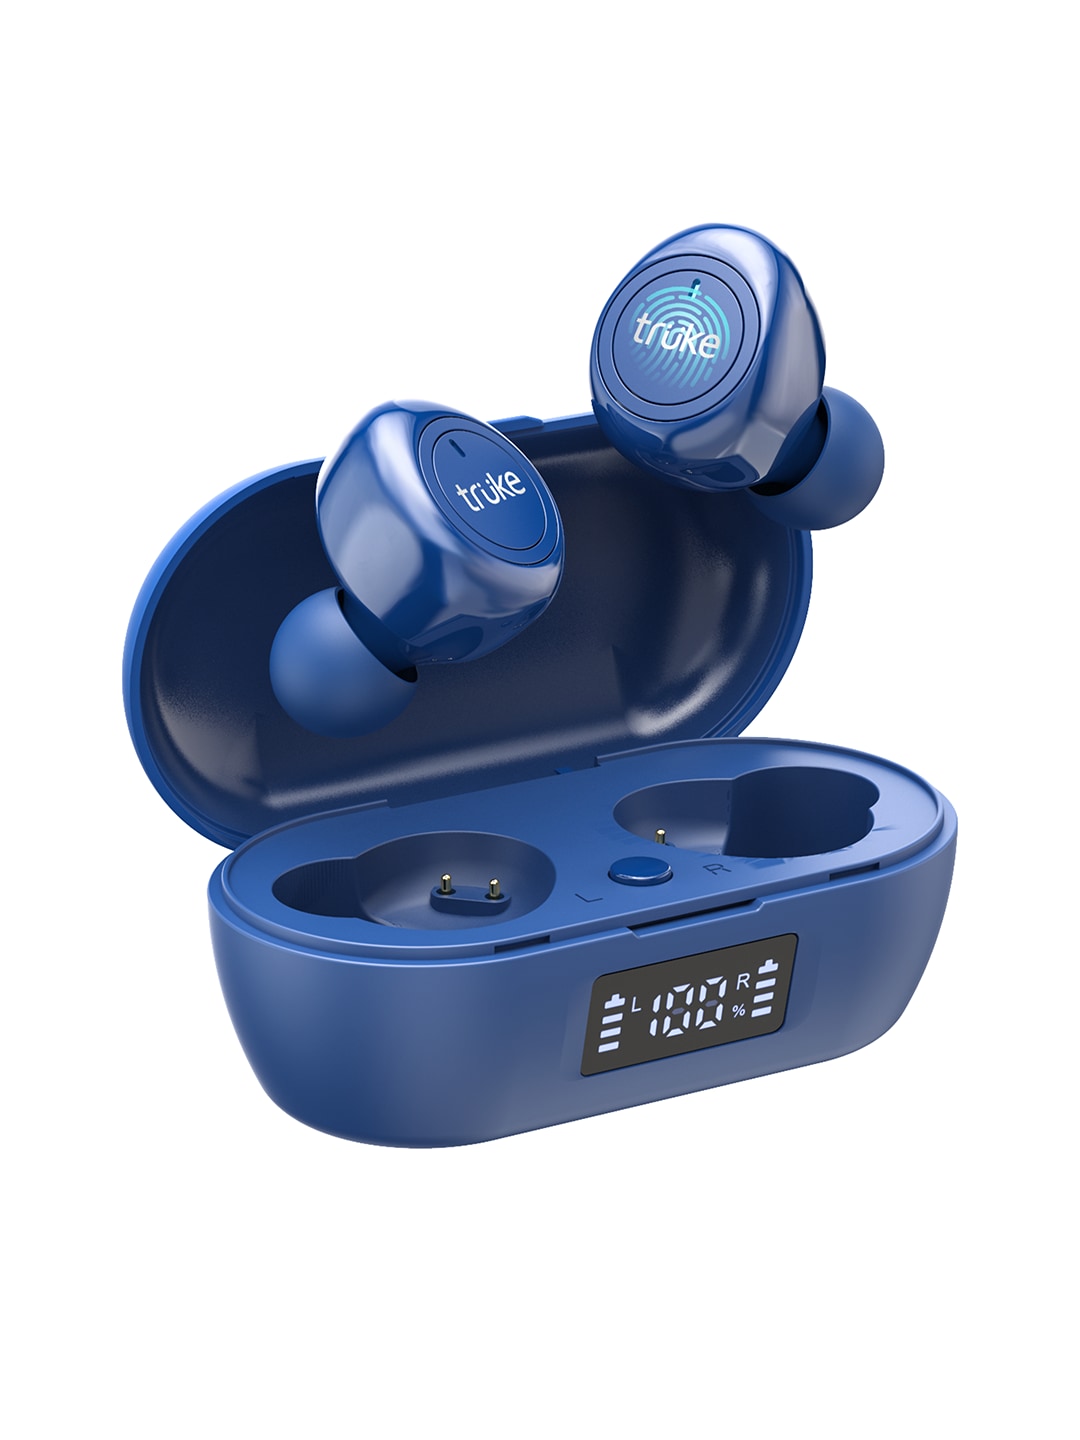 truke Fit 1+ True Wireless Earbuds - Blue Price in India